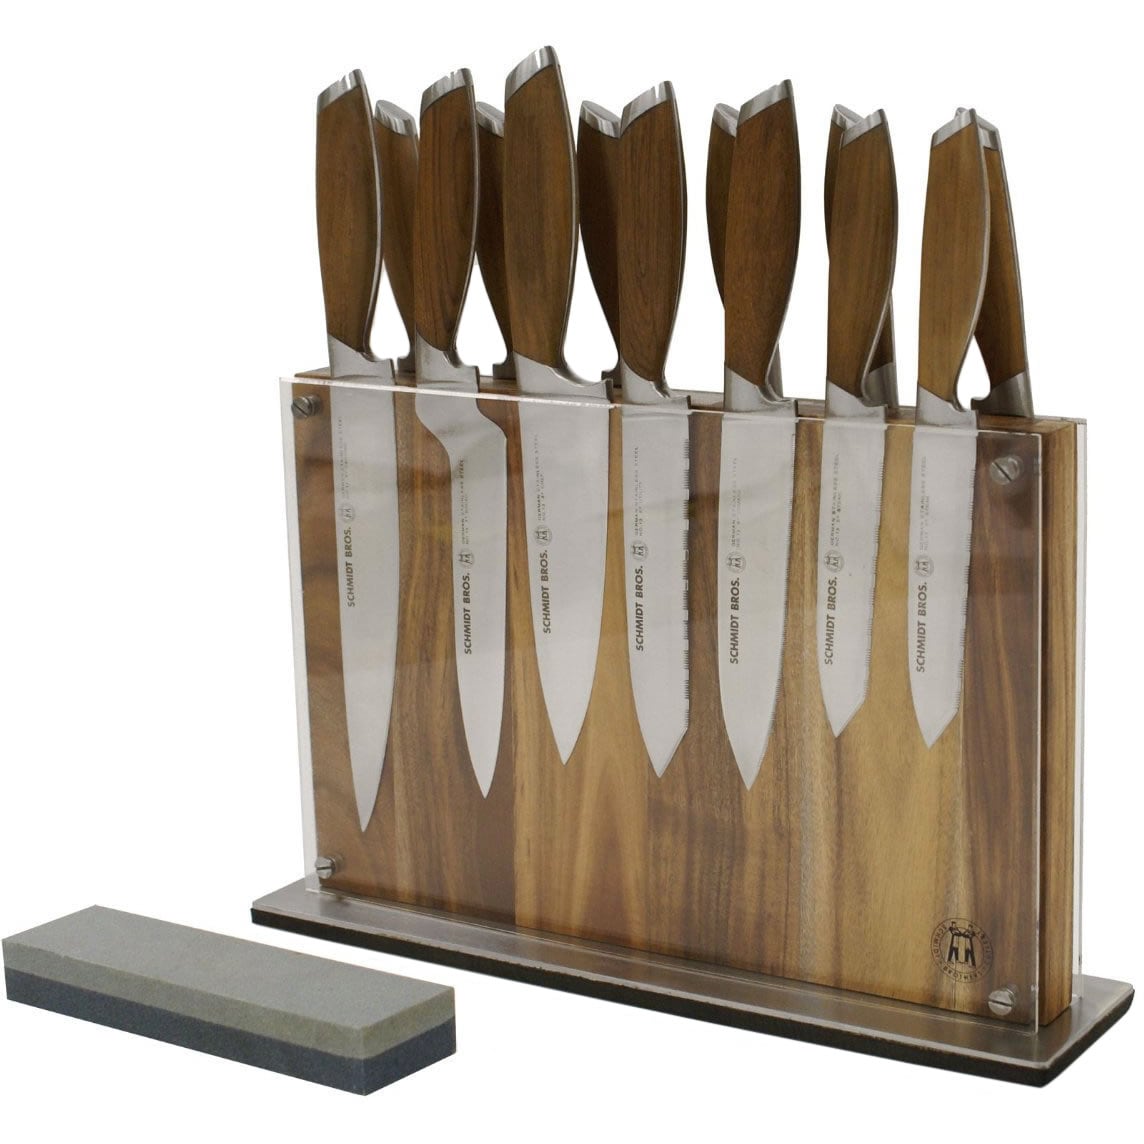 https://ak1.ostkcdn.com/images/products/9091629/Schmidt-Brothers-Cutlery-15-piece-Bonded-Teak-Full-Knife-Set-905828df-128f-4899-8a62-f86d74b2c1bd.jpg